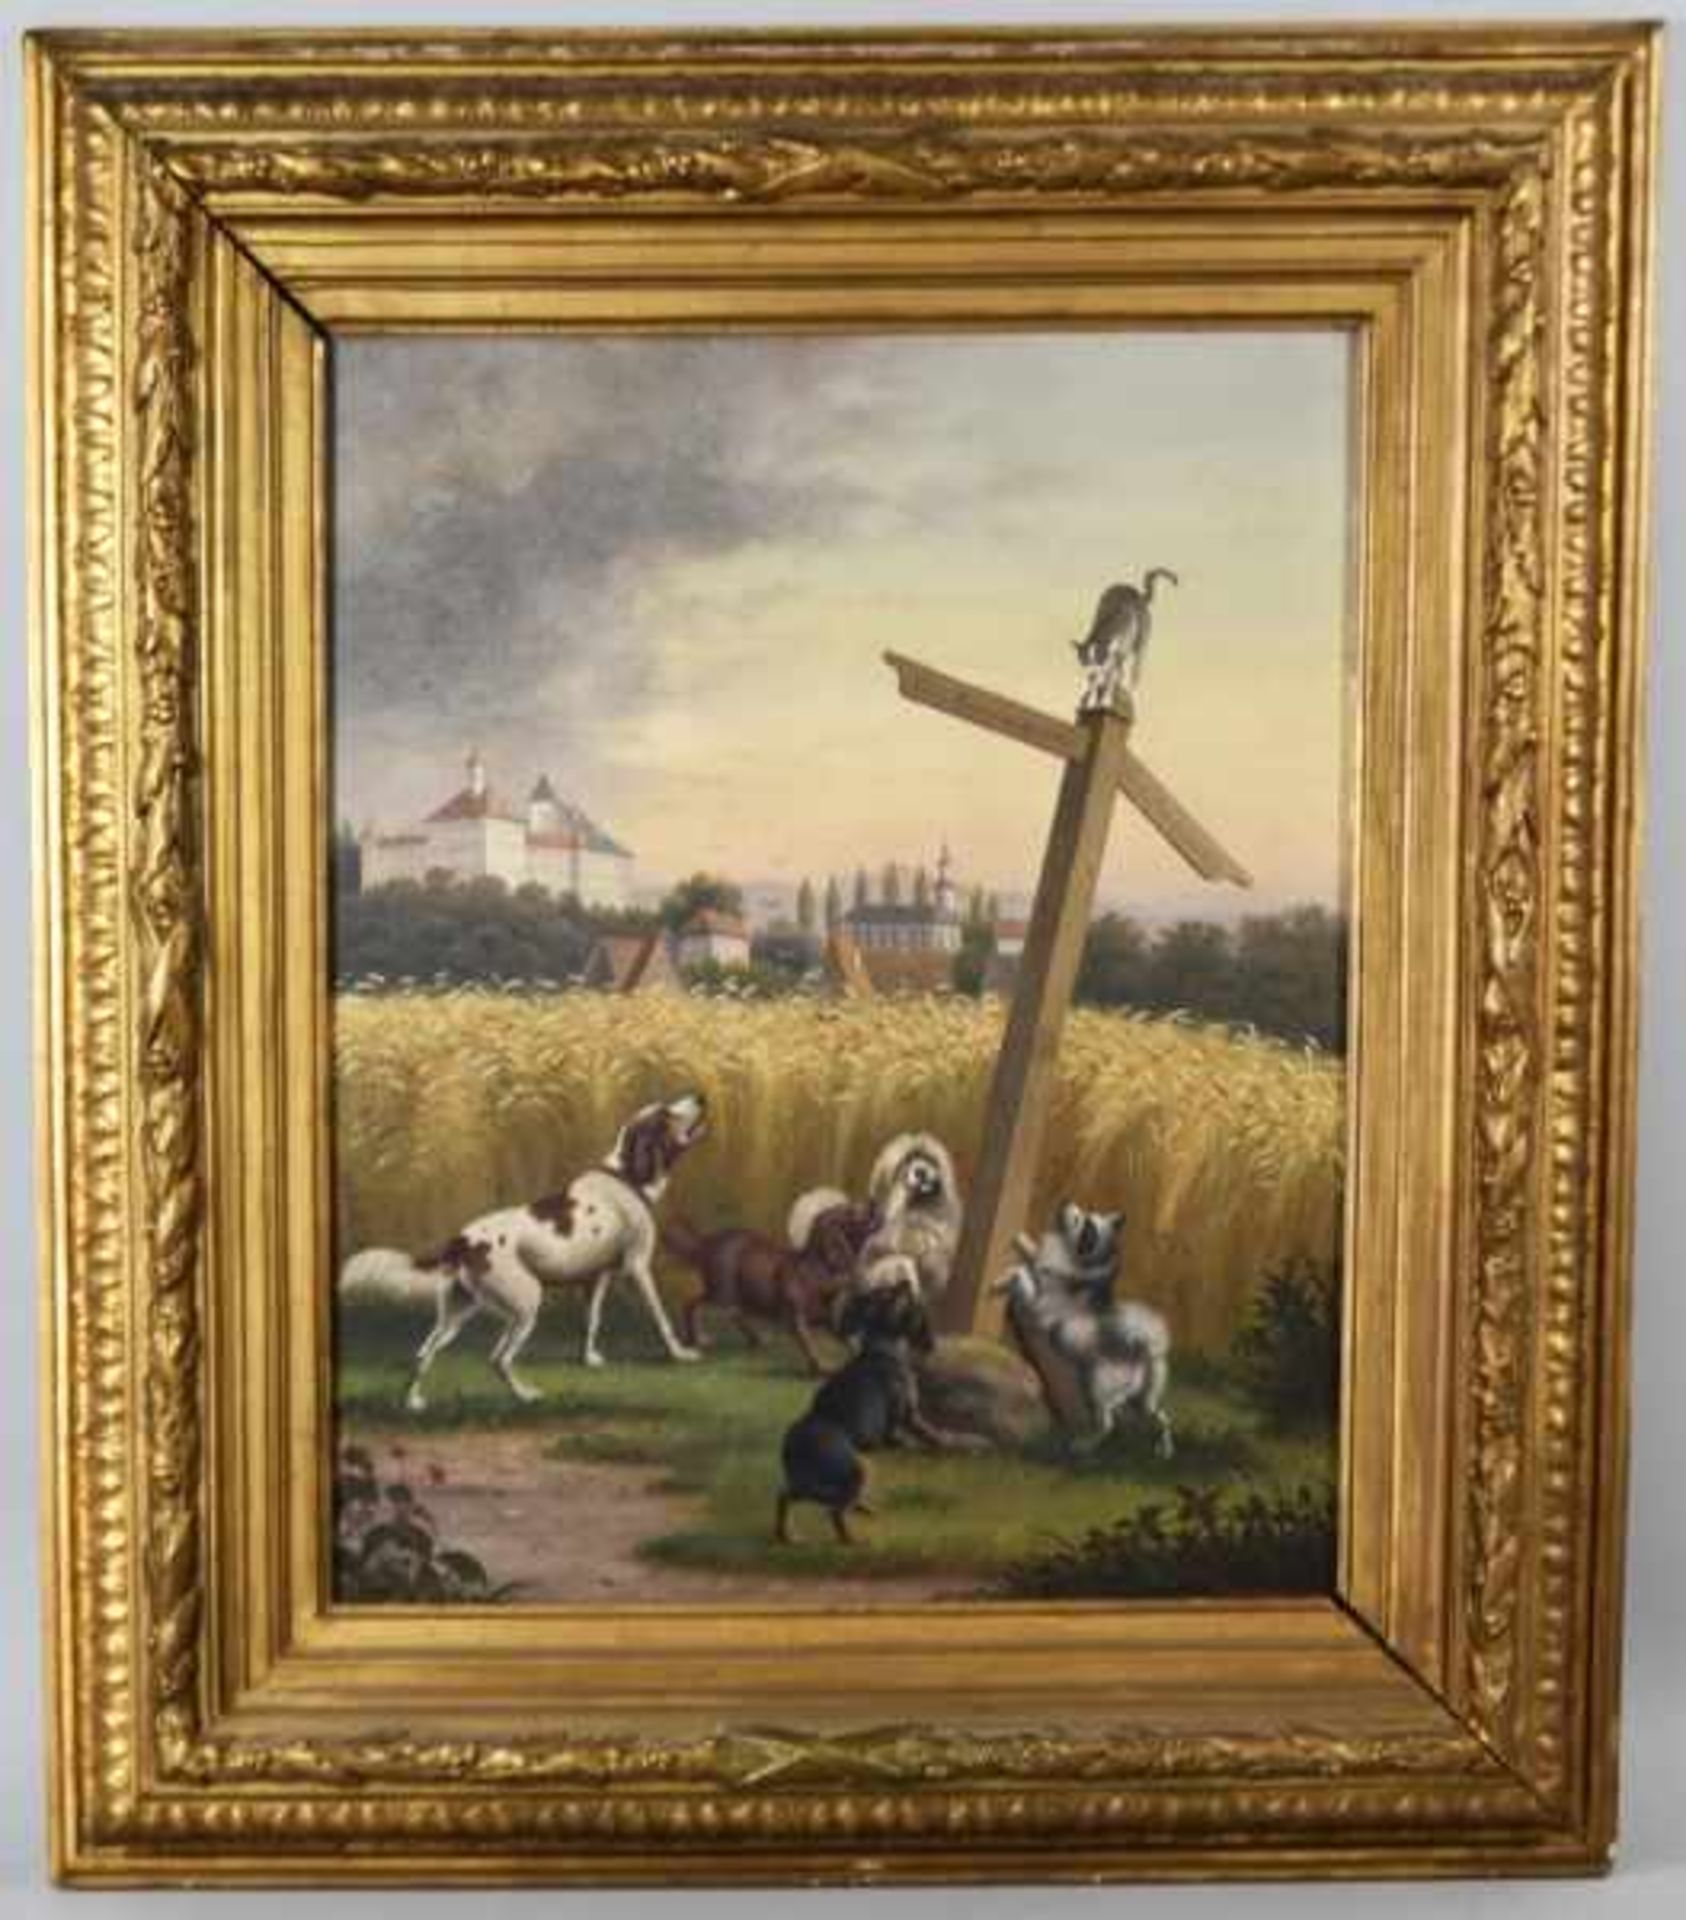 GEORGIUS Robert (1871 - 1942 Deutschland) "Hunde am Wegkreuz", 5 Hunde bellend vor einem Wegkreuz - Image 2 of 3